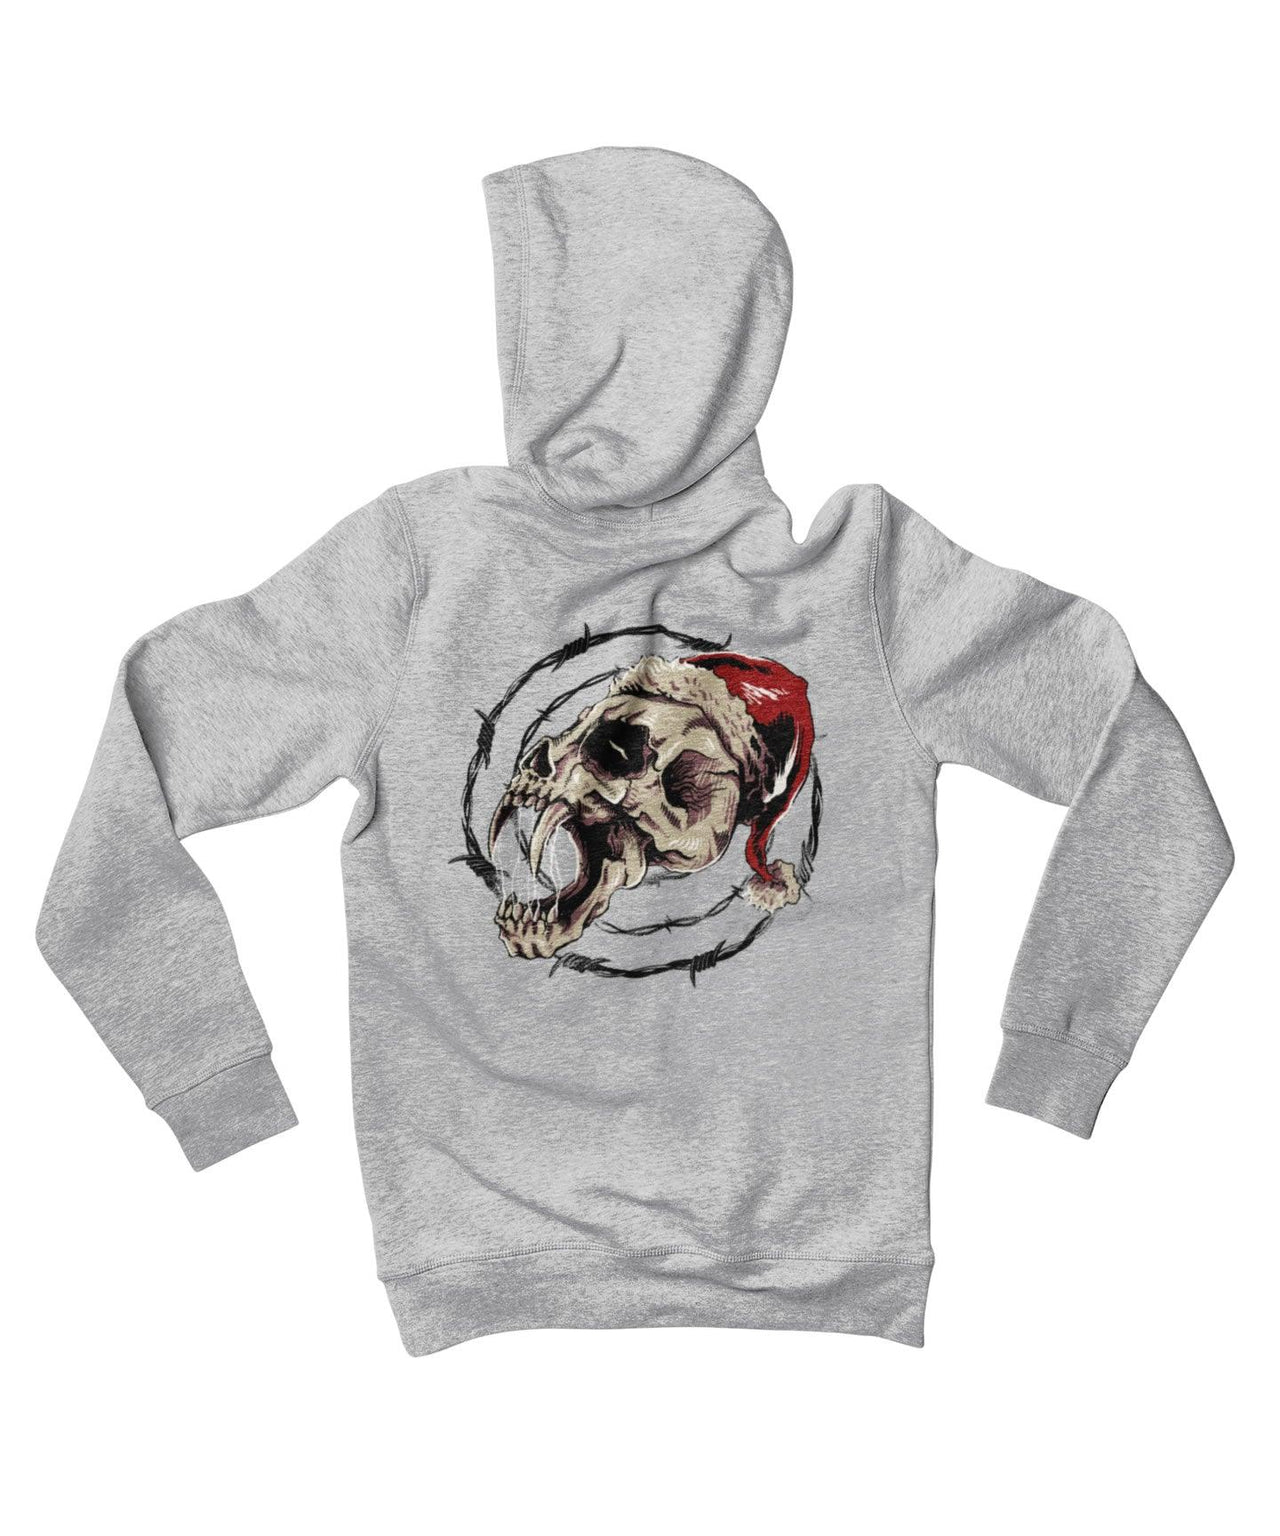 Demon Skull Santa Back Printed Christmas Hoodie For Men and Women 8Ball